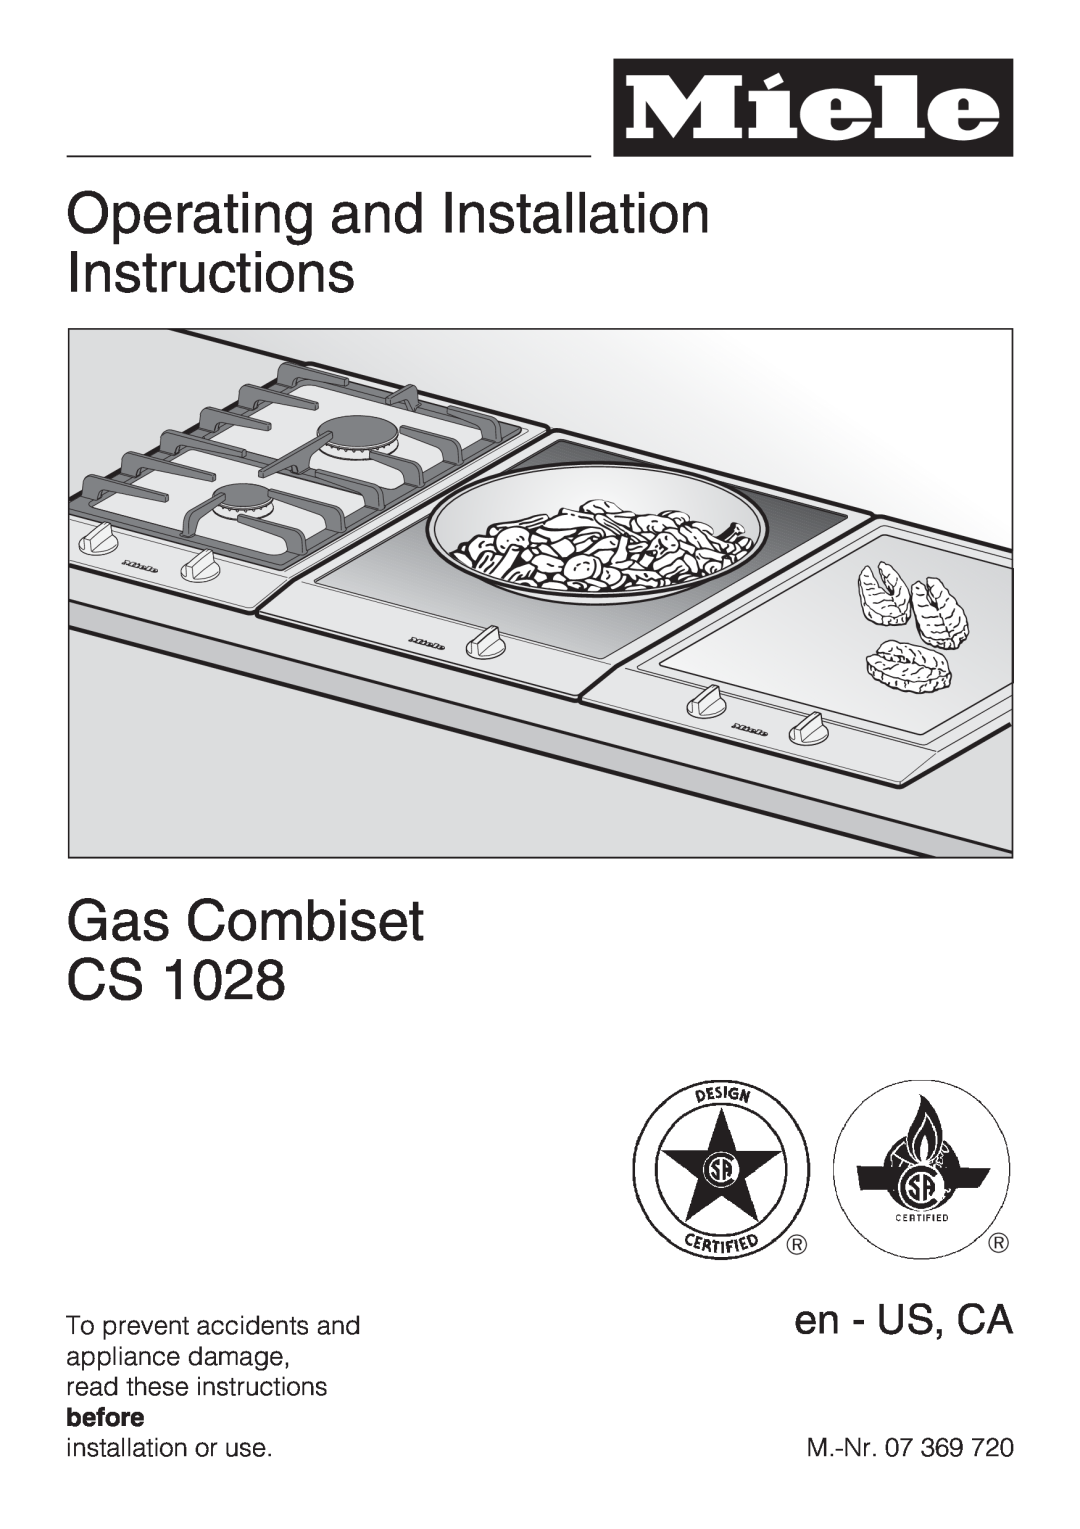 Miele CS 1028 installation instructions Operating and Installation Instructions Gas Combiset CS, en - US, CA 